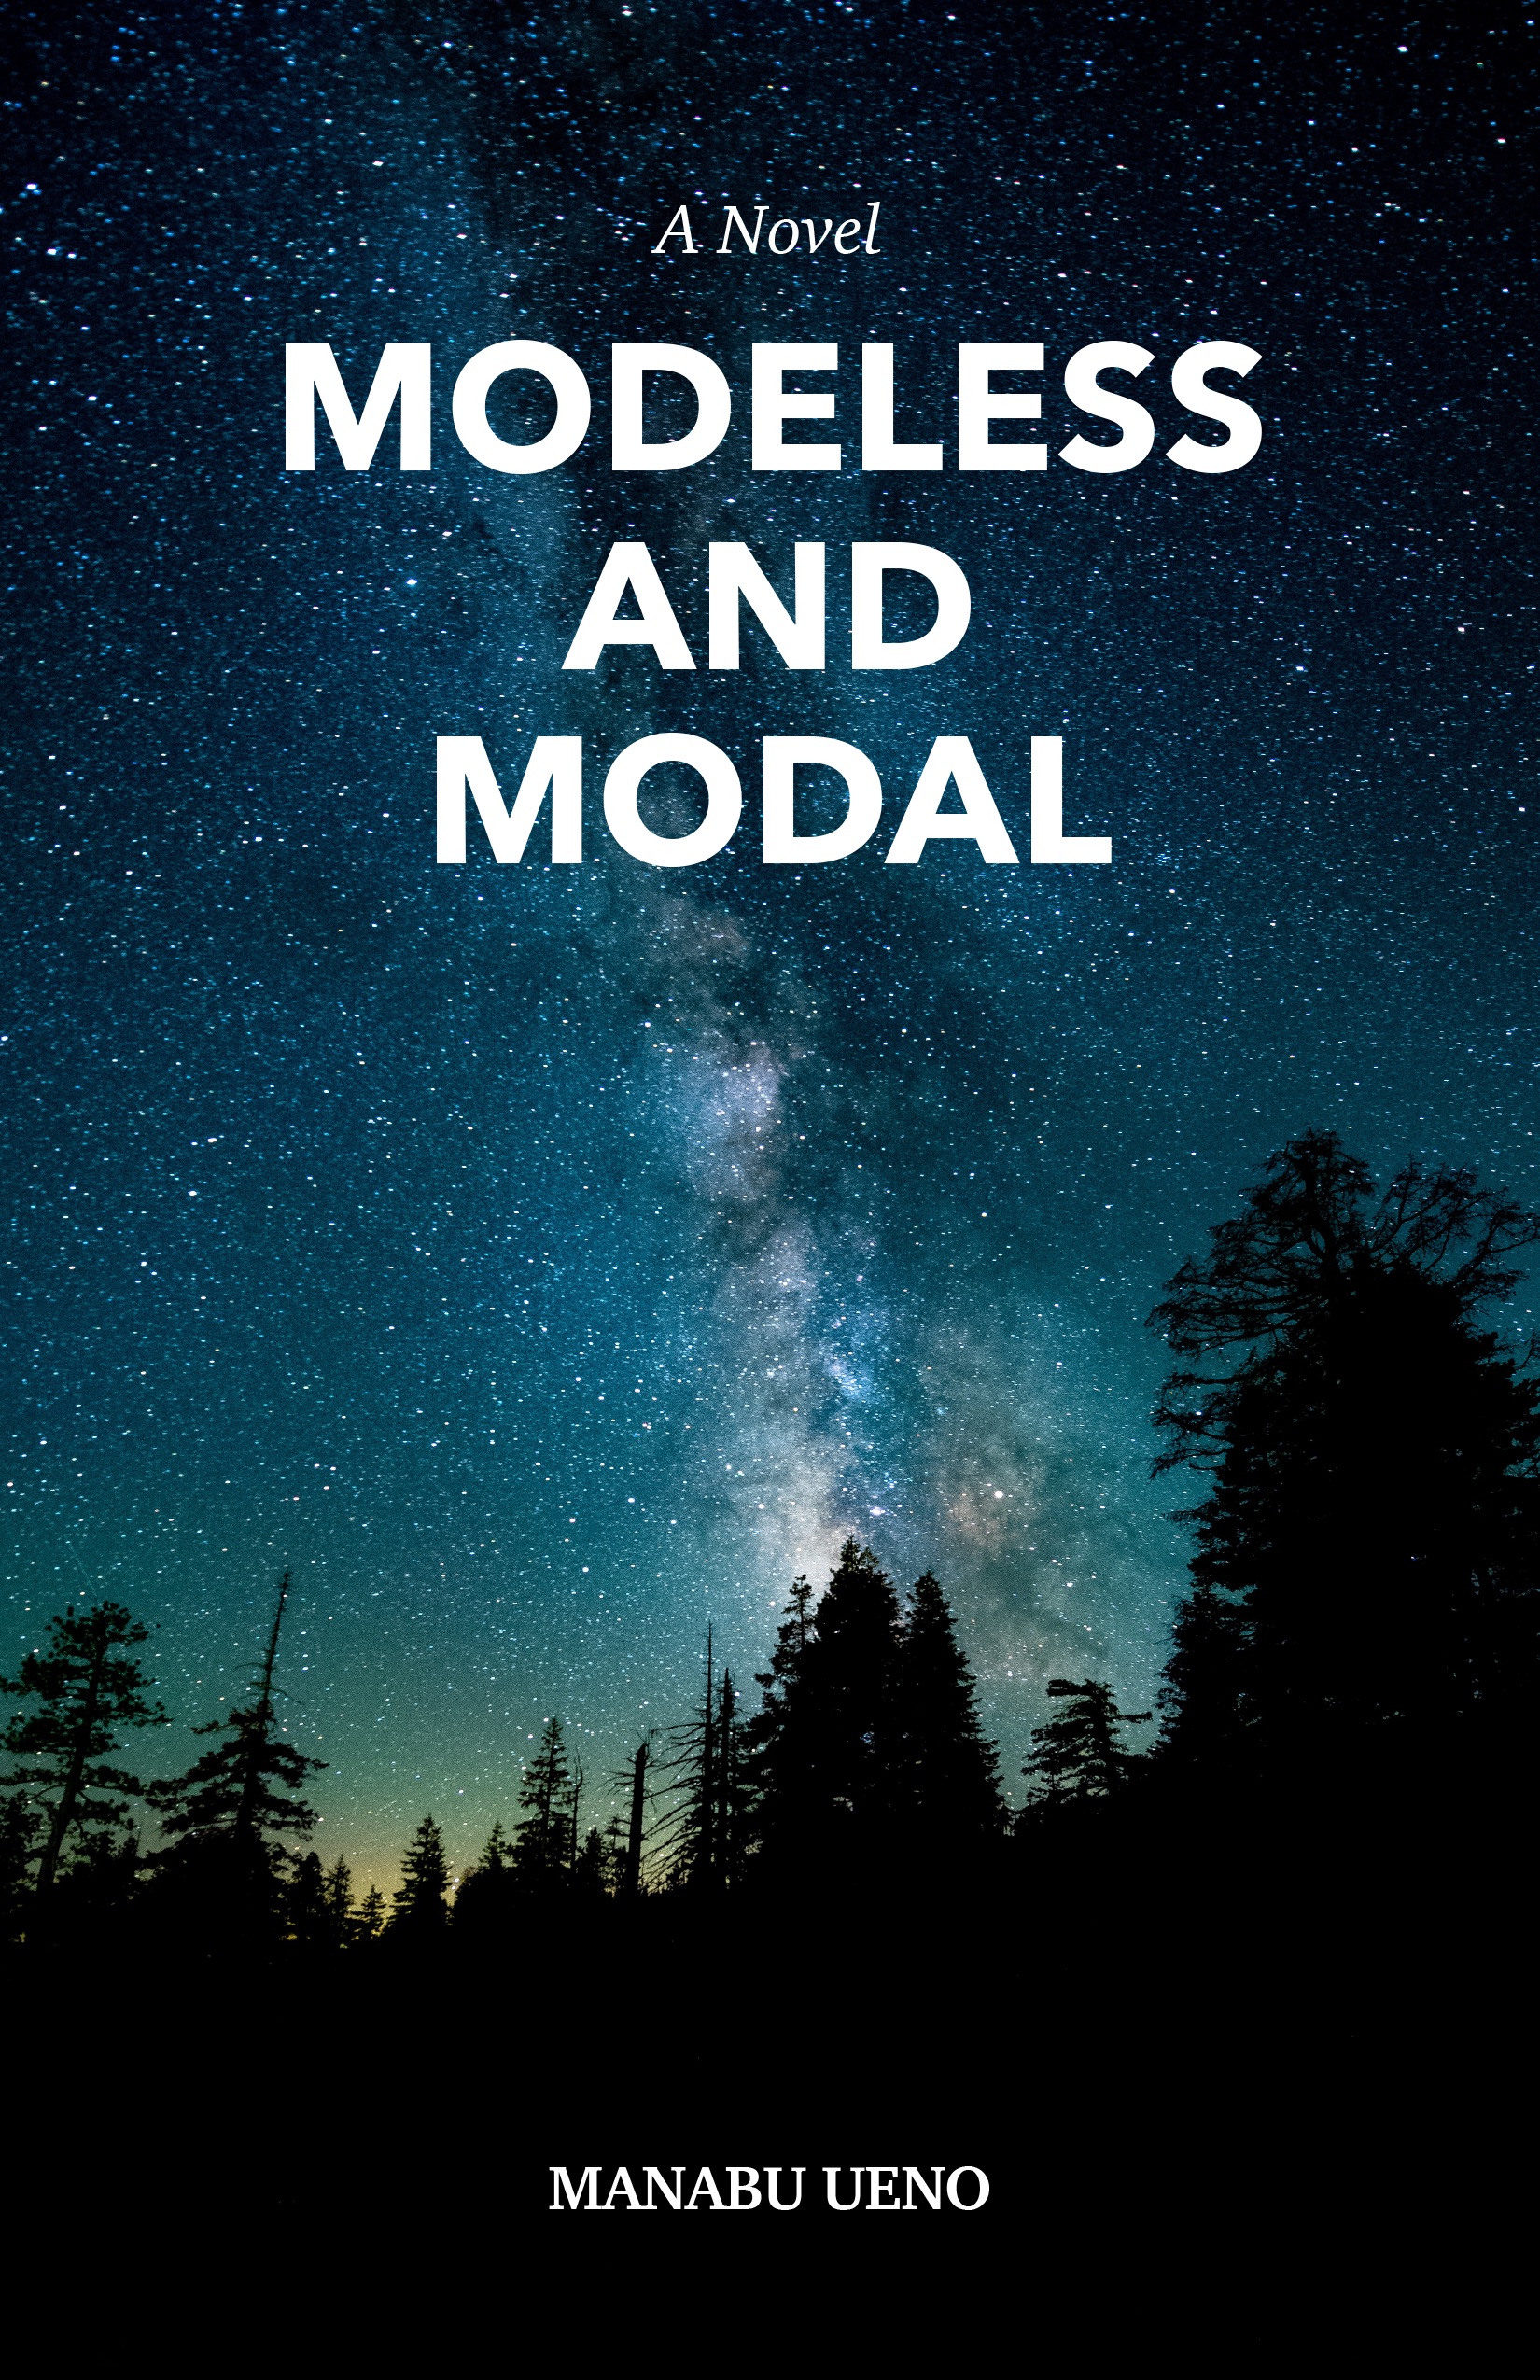 Modeless and Modal e-book cover